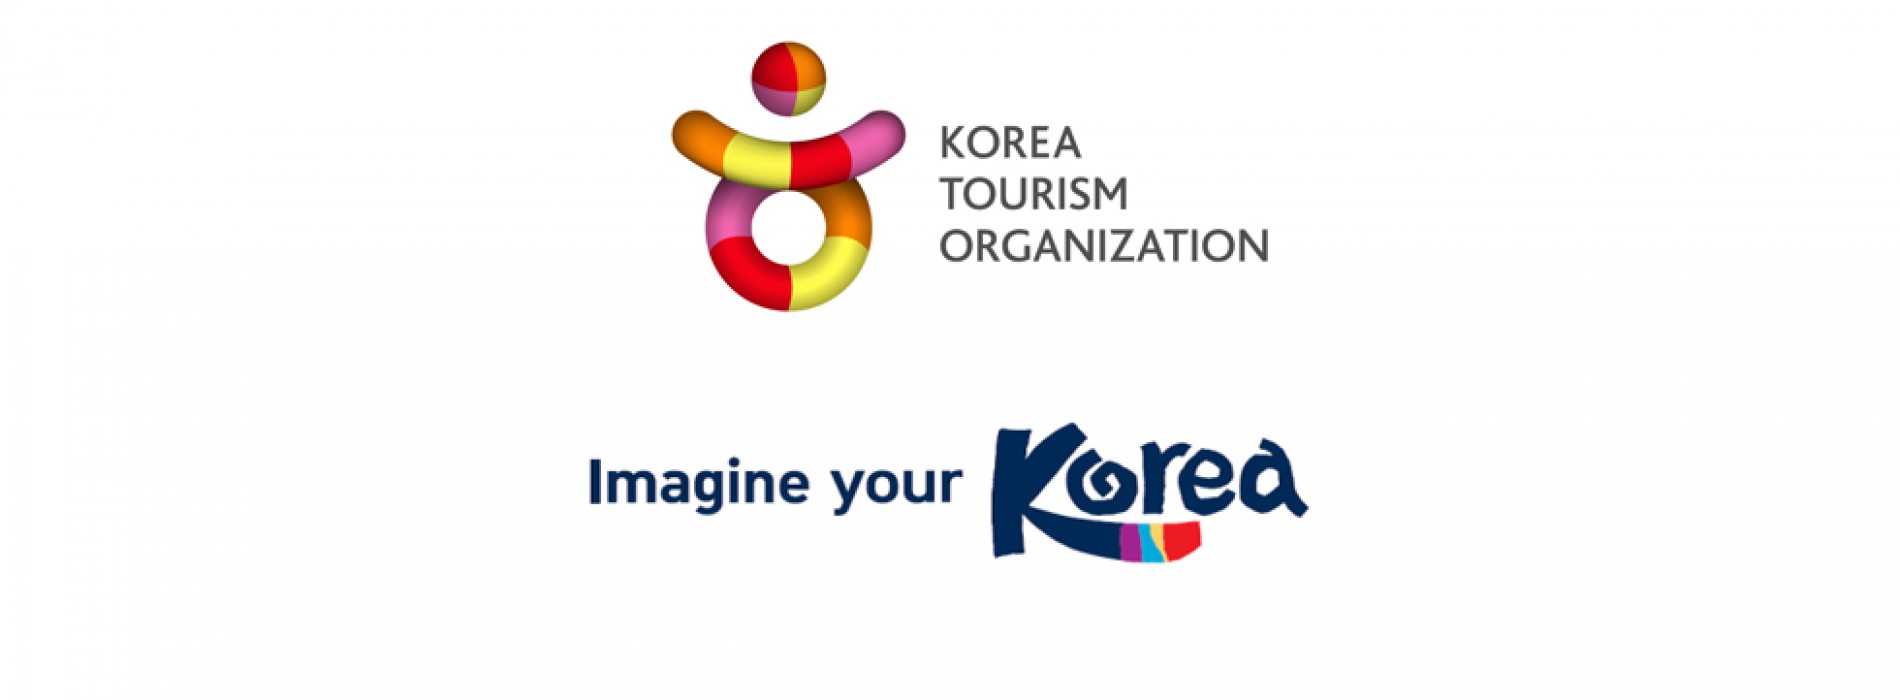 korea tourism organization facebook